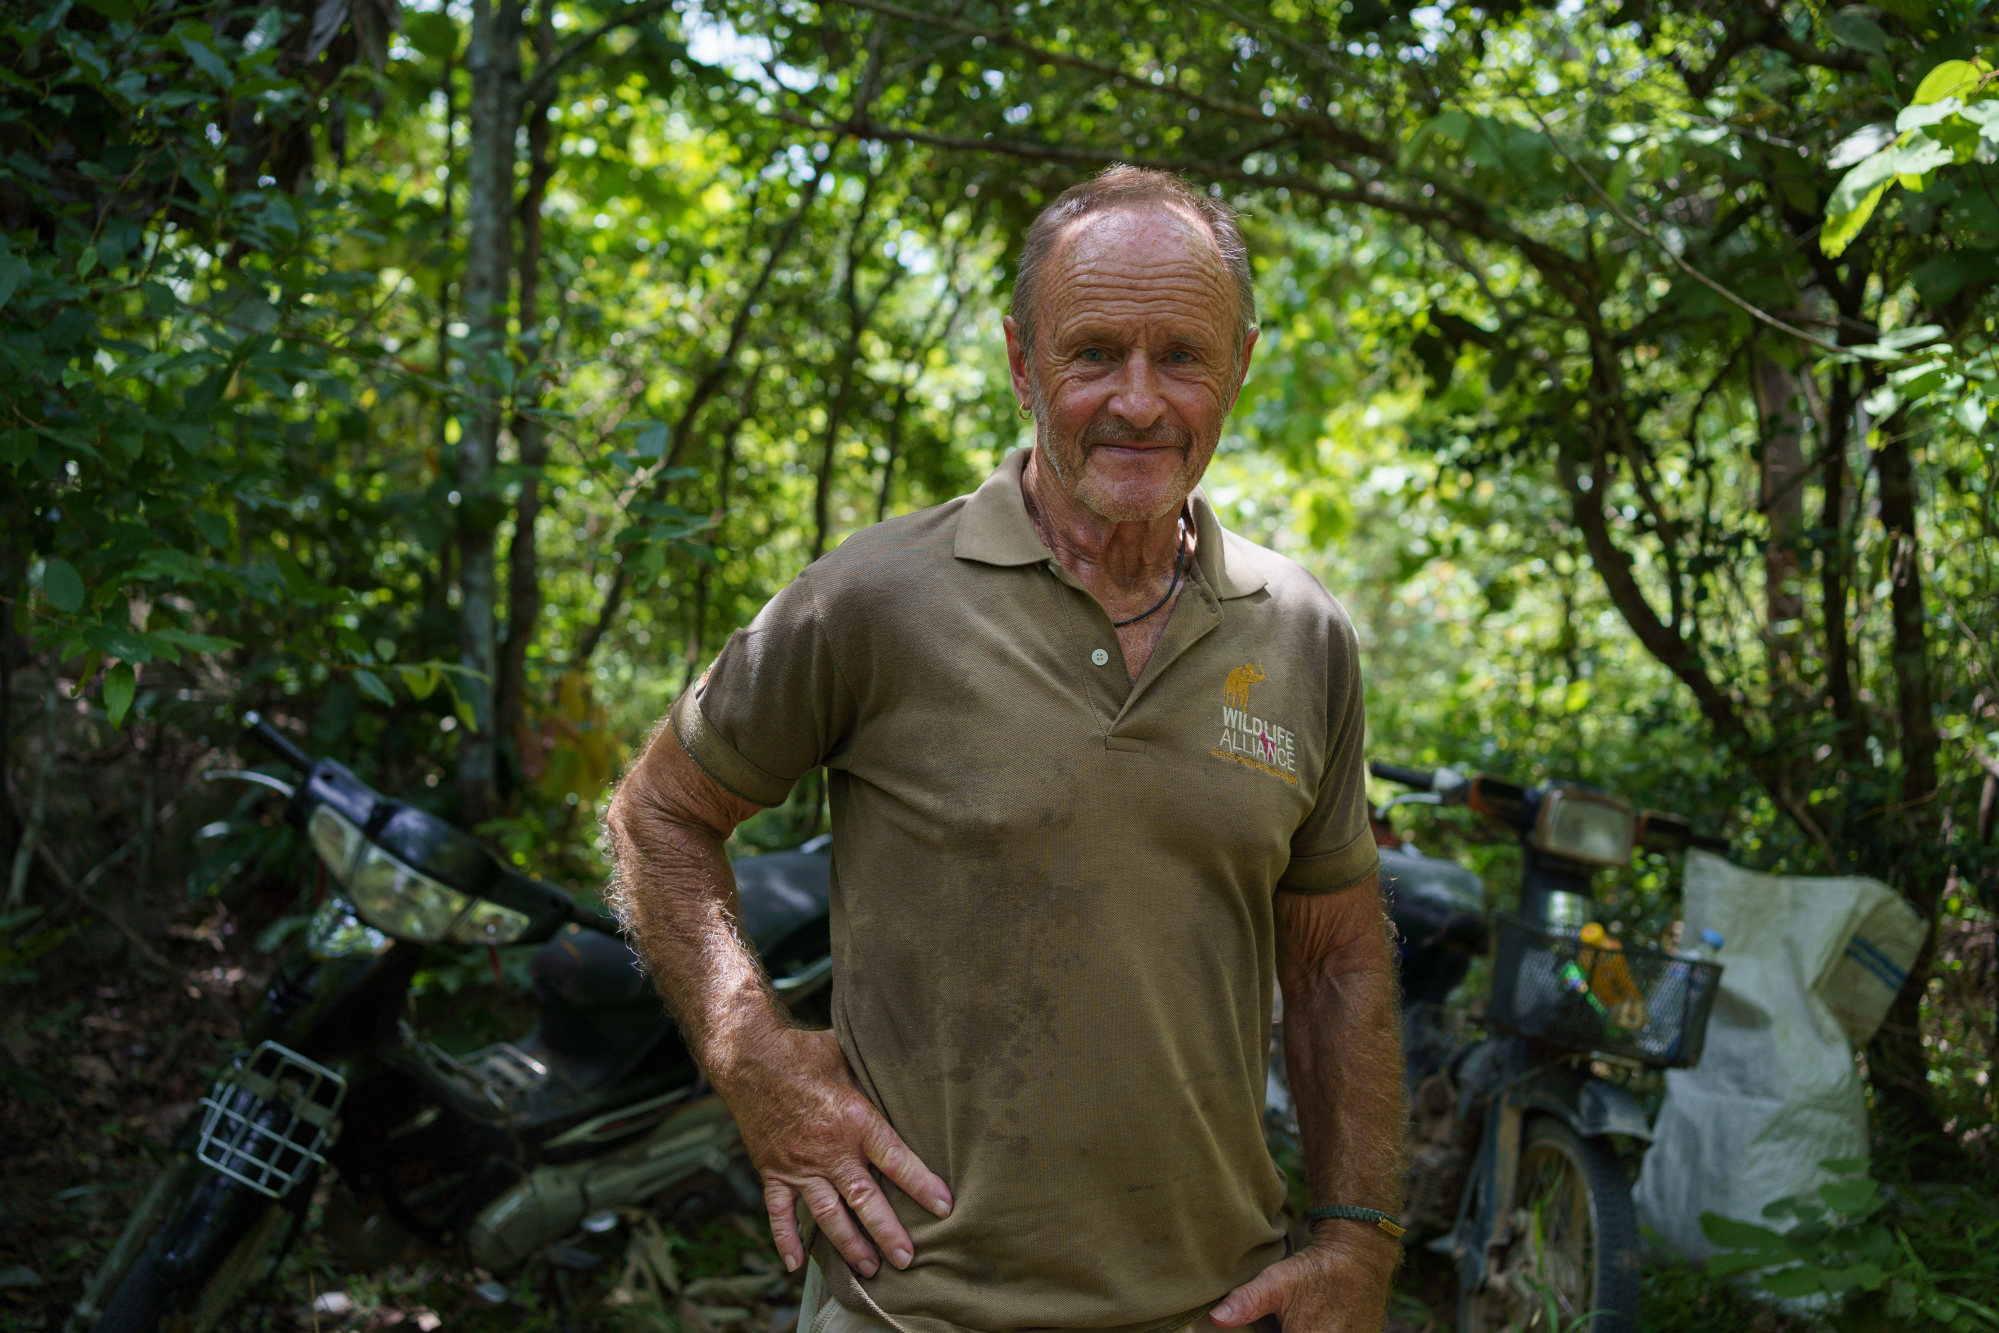 Nick Marx, a director with Wildlife Alliance. Photo: Thomas Cristofoletti / Ruom